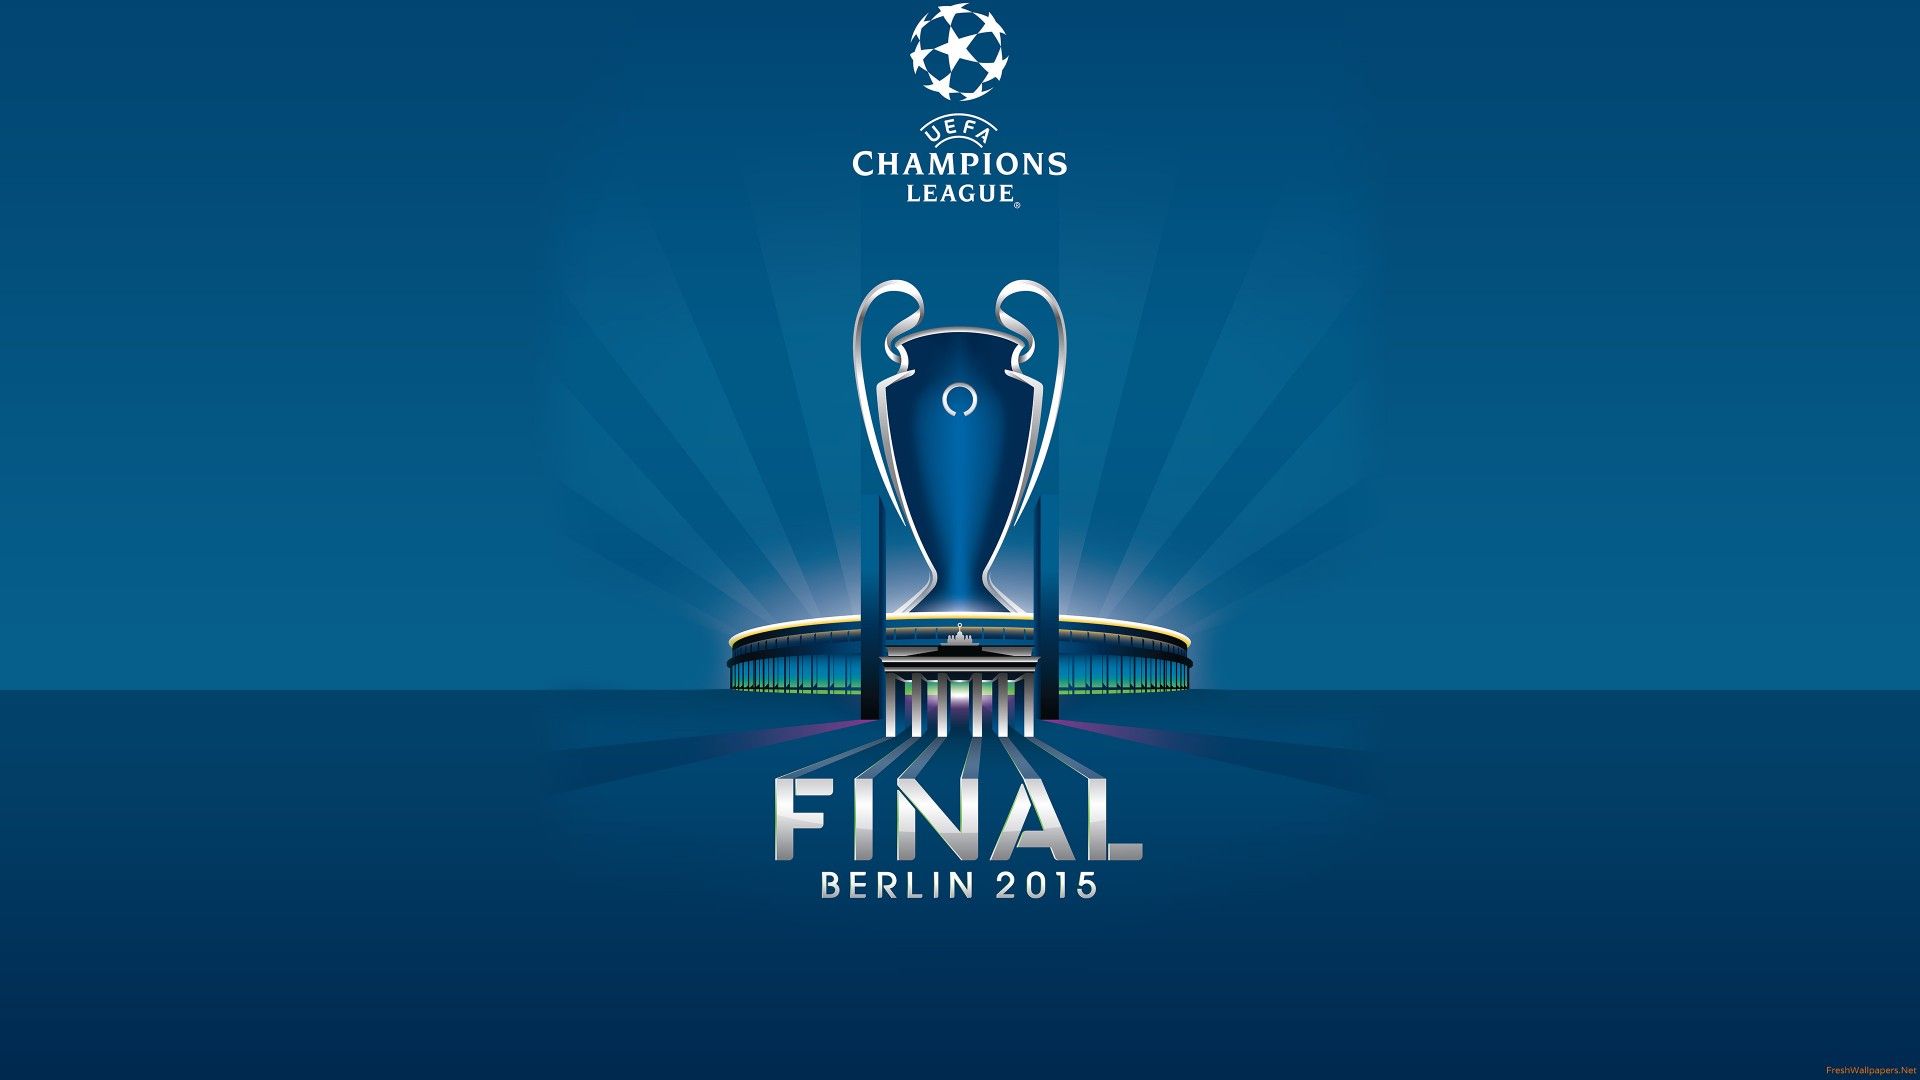 UEFA Champions League Berlin 2015 Final Logo wallpapers ...